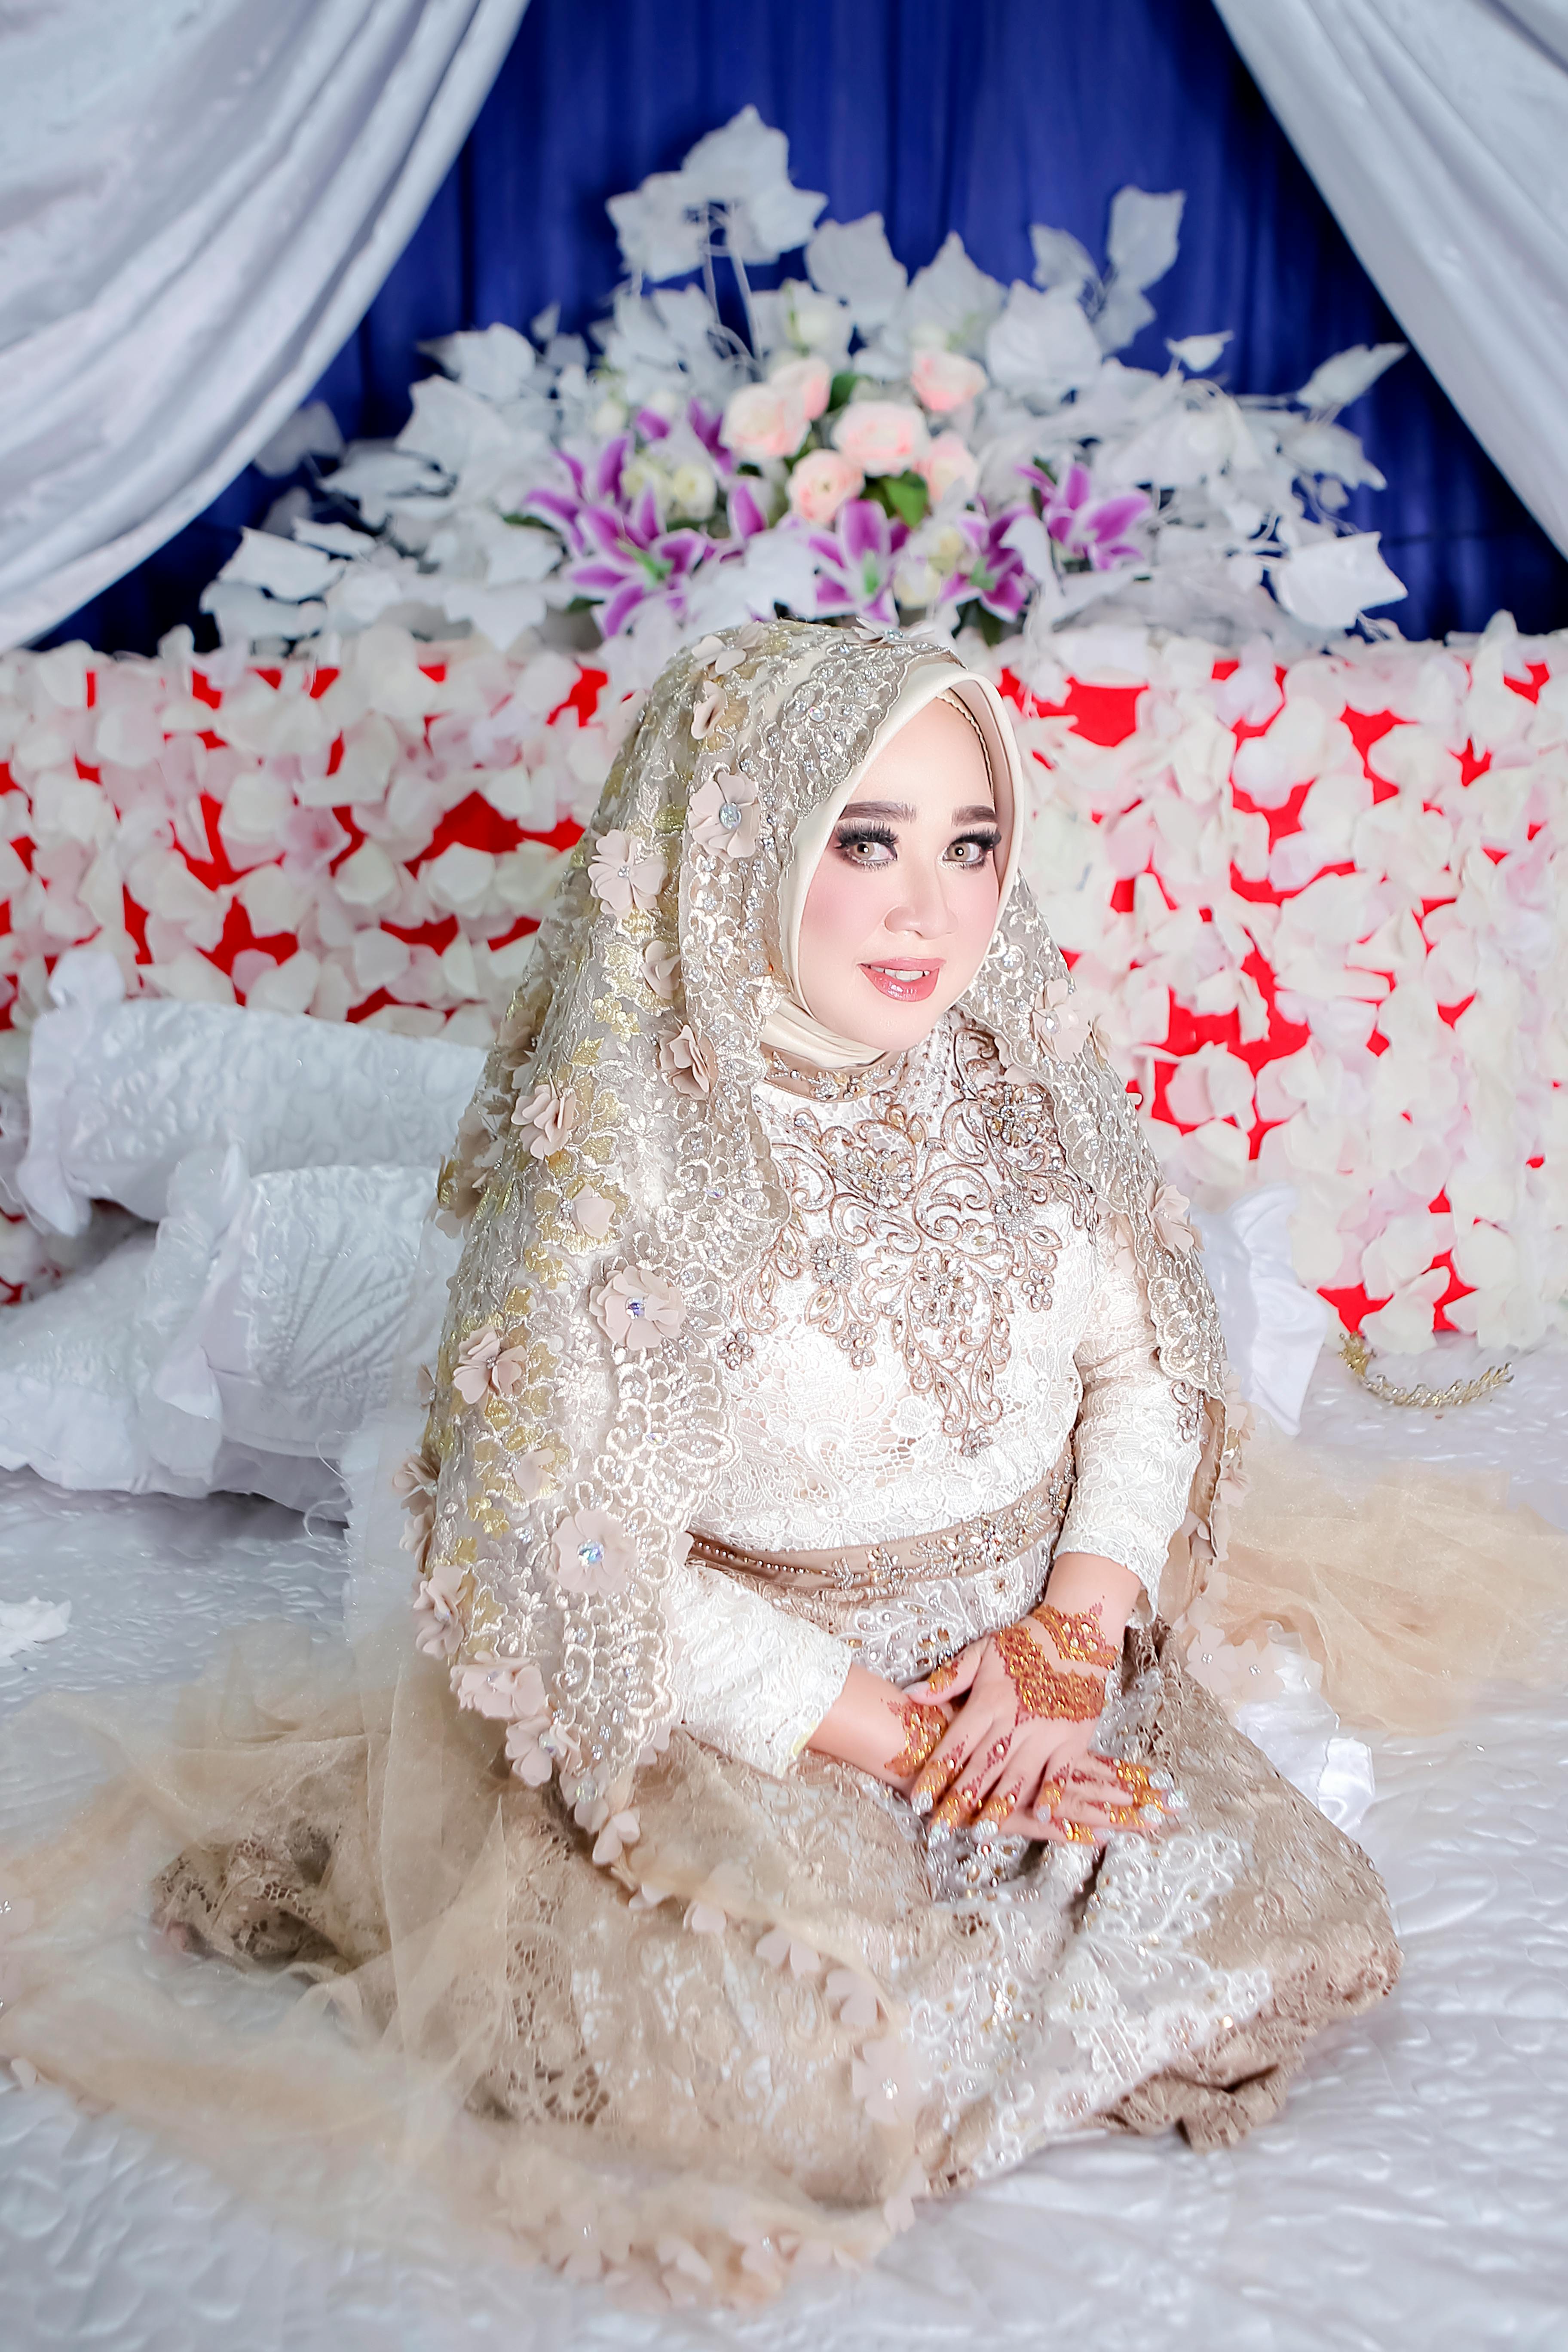 New Arrival Satin Muslim Wedding Dresses High Neck Ball Gown – Rjerdress